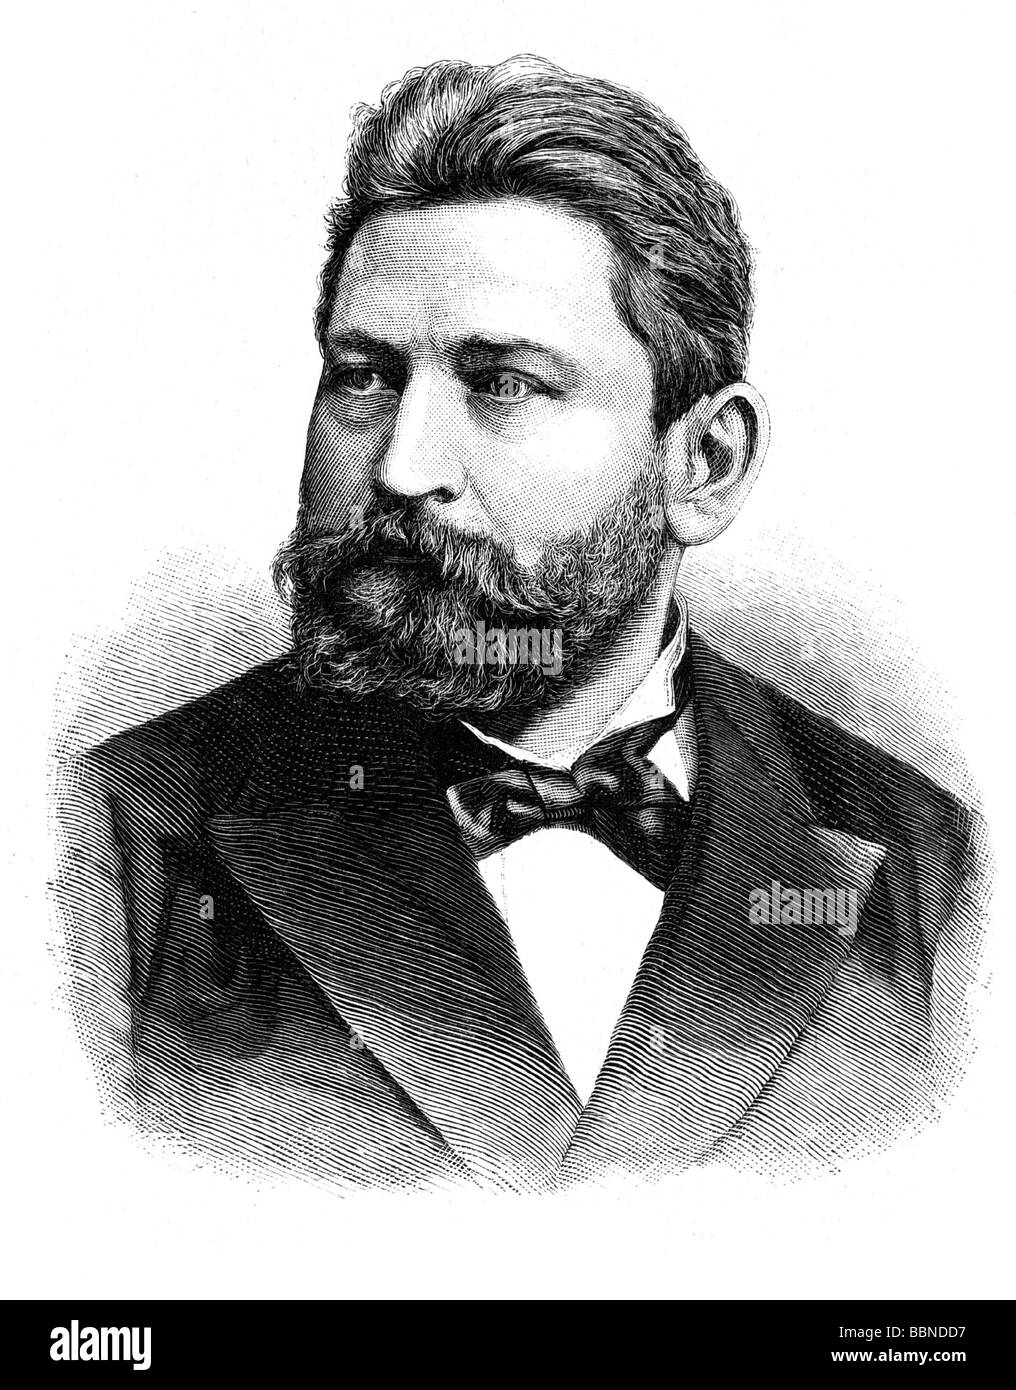 Frank, Ernst, 7.2.1847 - 17.8. 1889, German musician, composer, court bandmaster in Hanover 1879, portrait, wood engraving, 19th century, Stock Photo